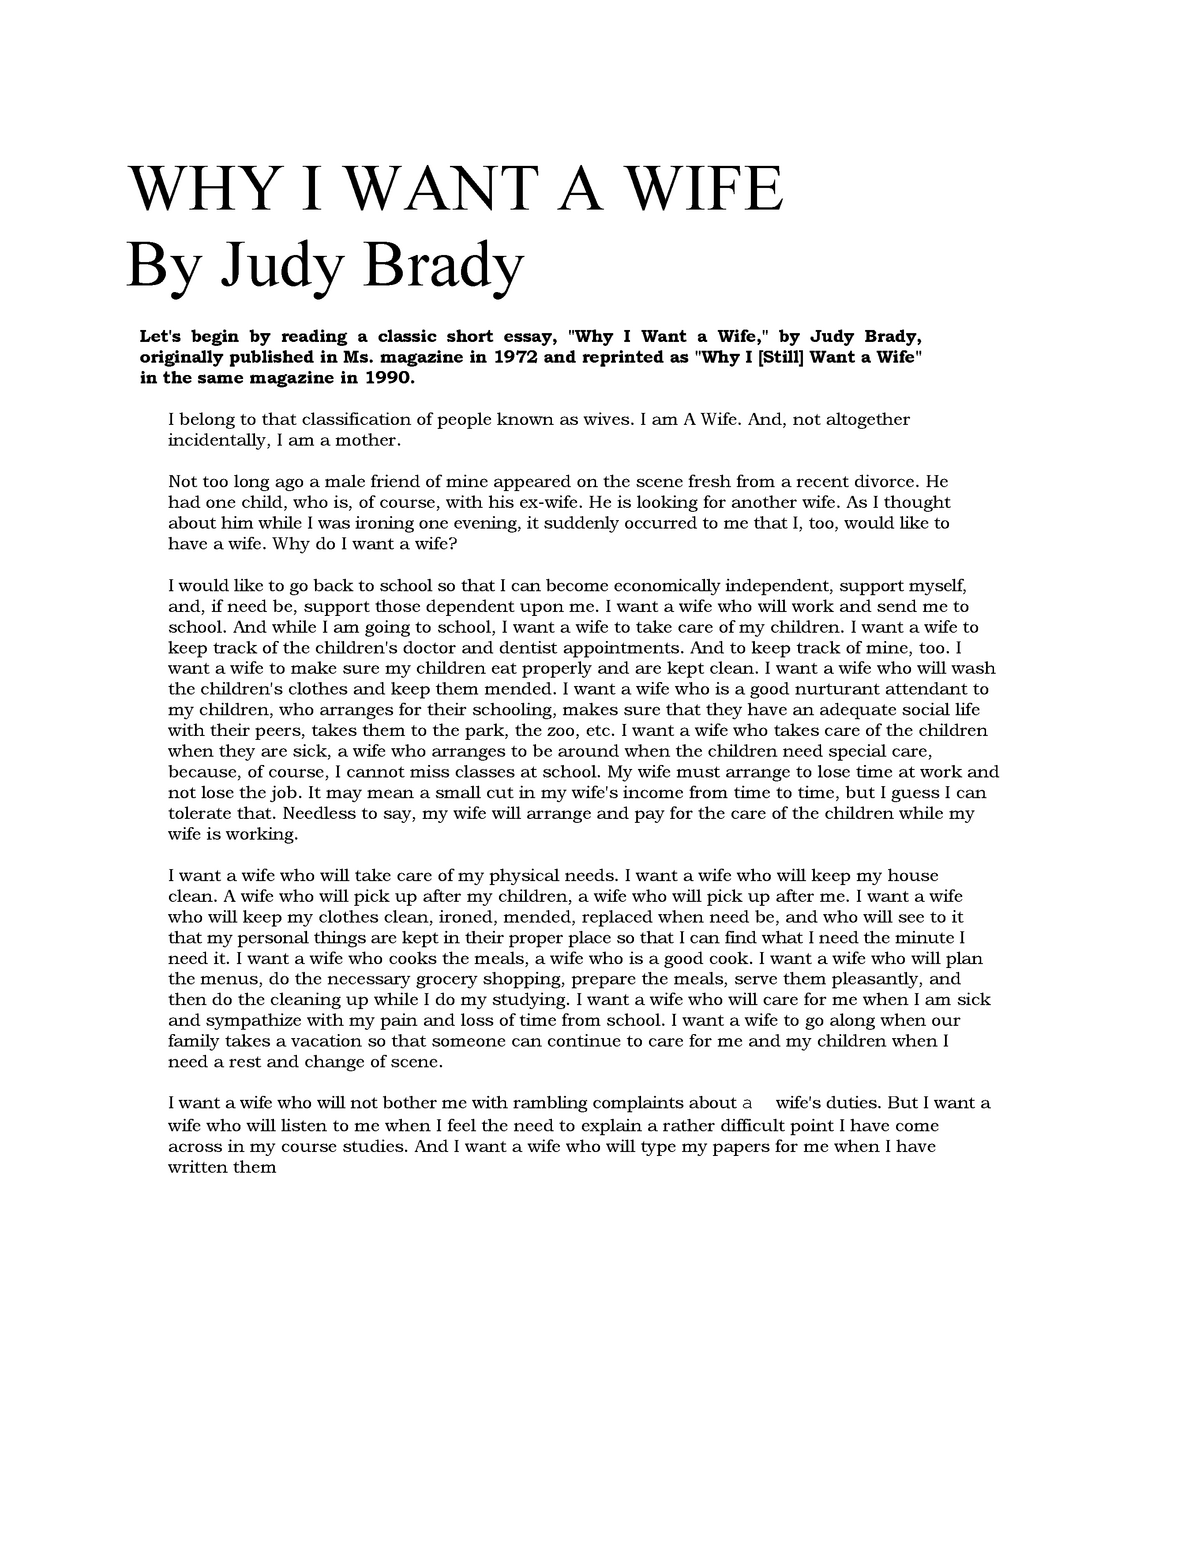 rhetorical analysis essay i want a wife